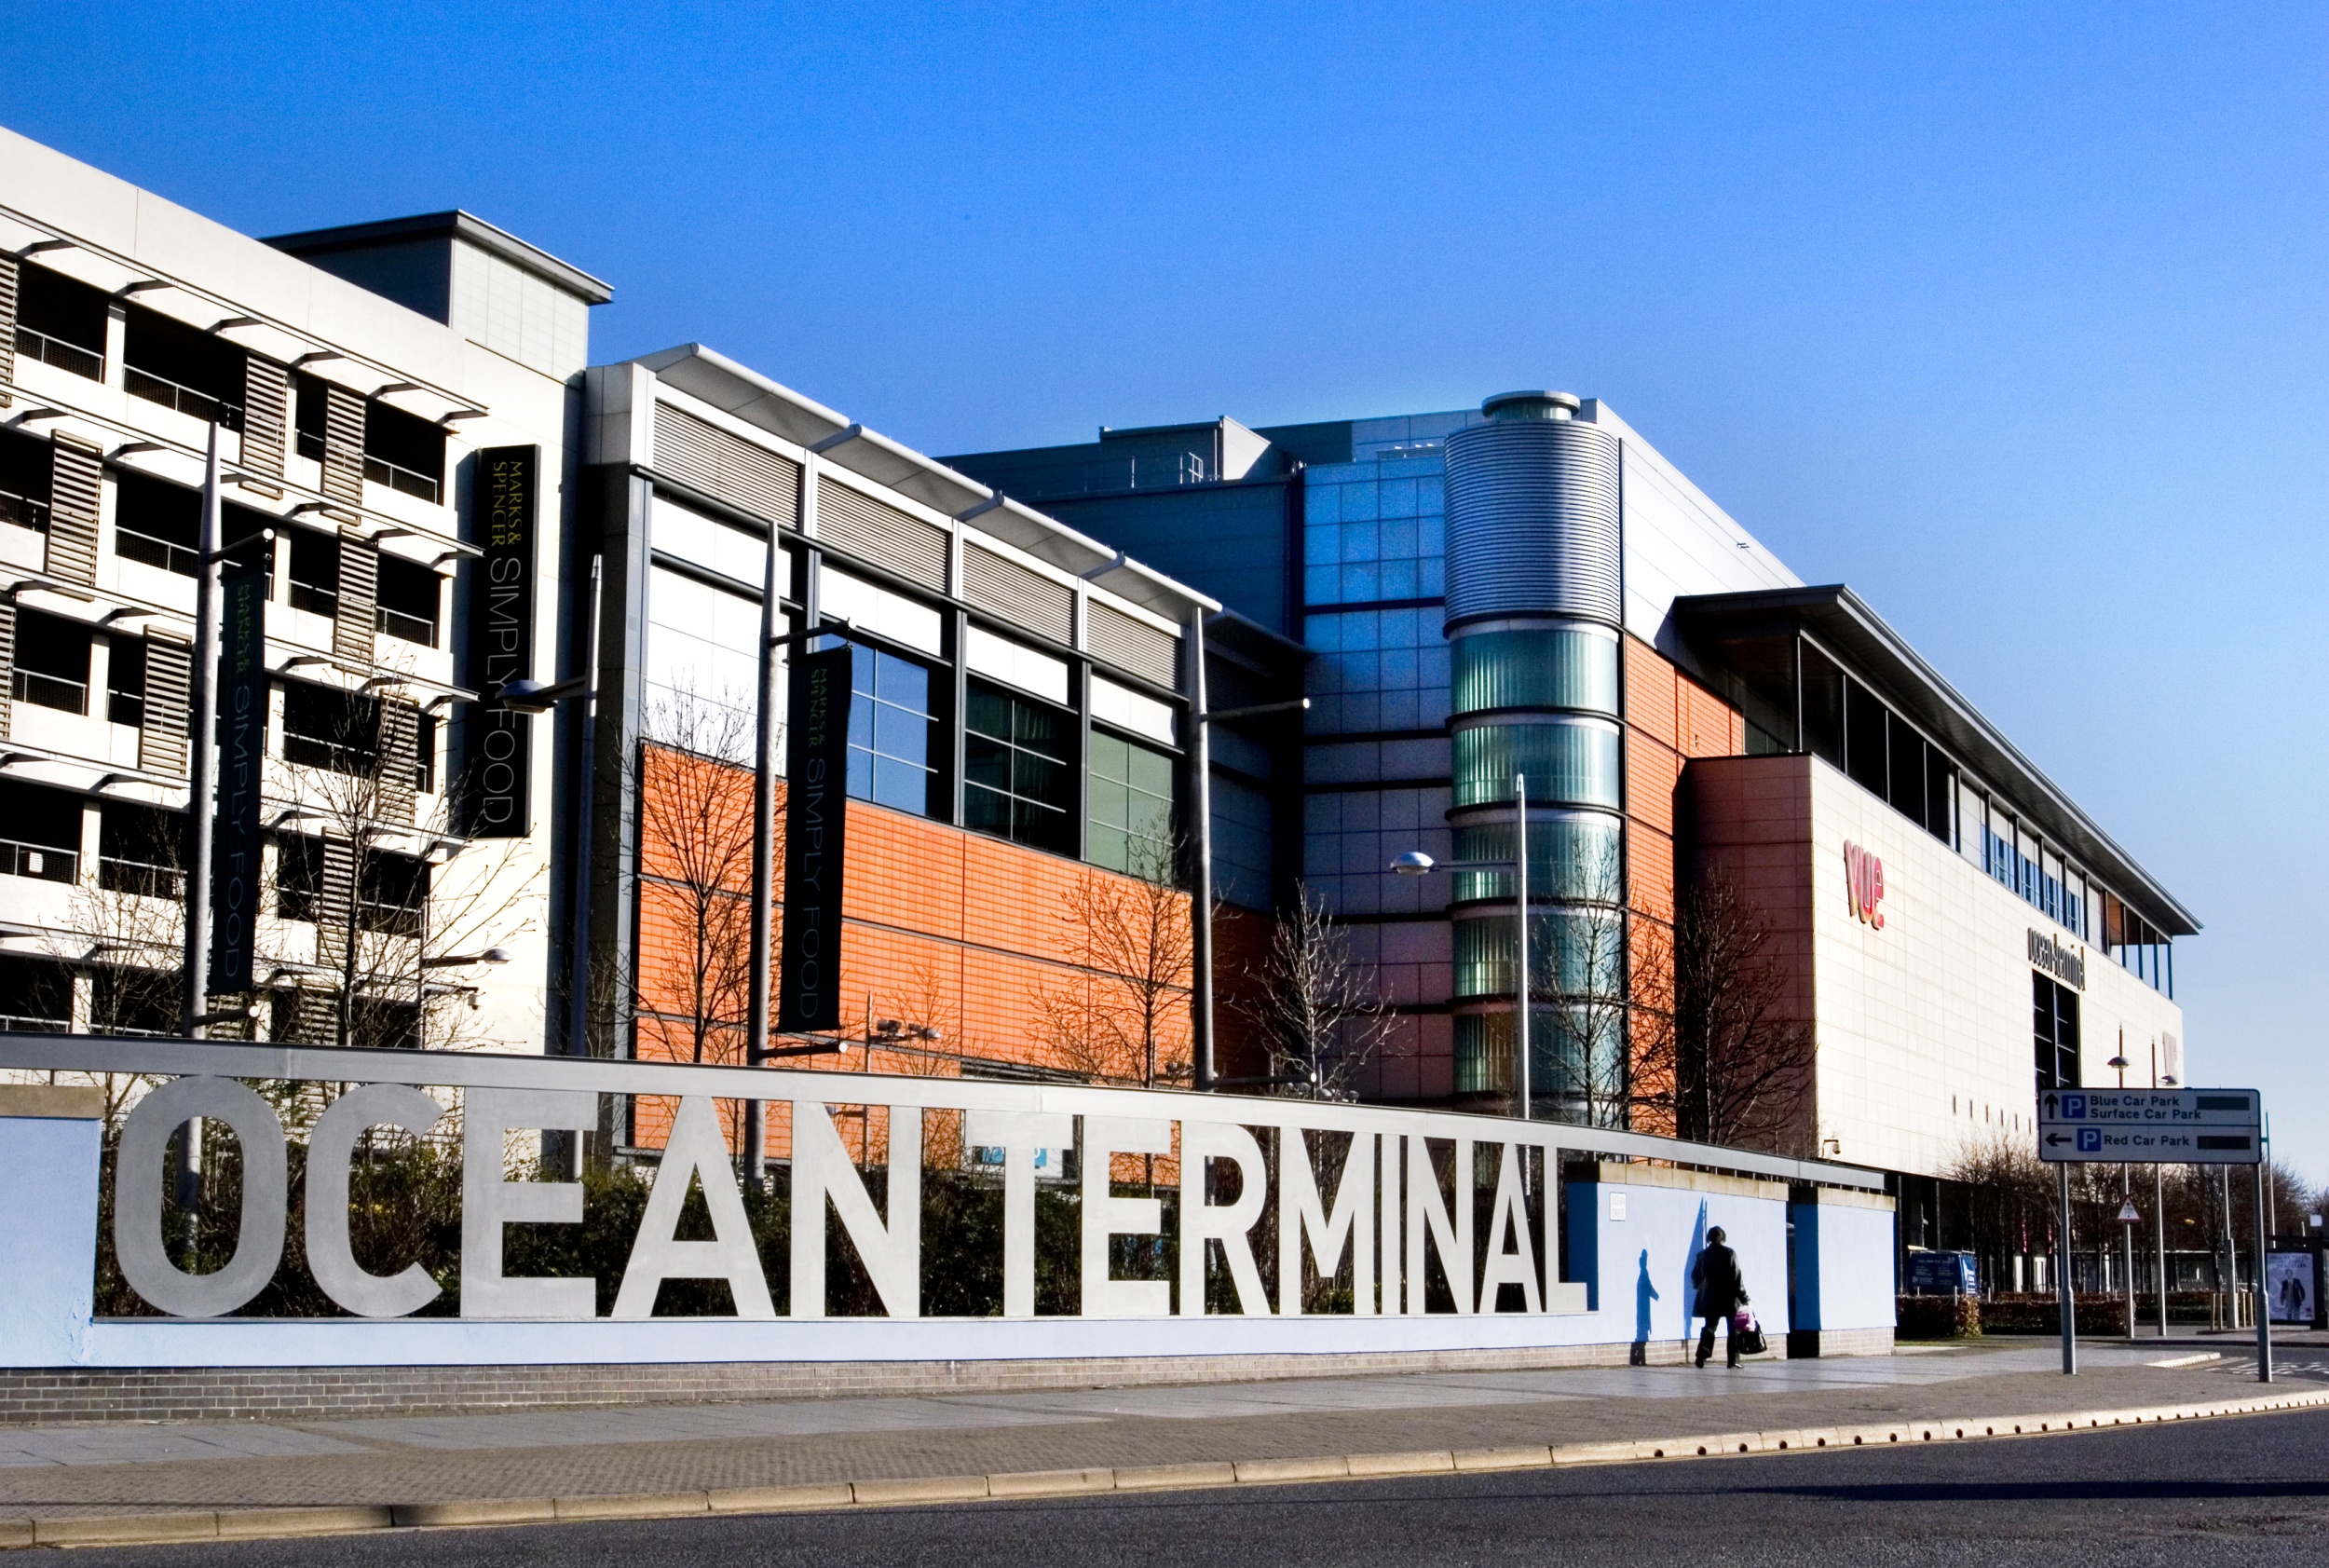 Ocean-Terminal-External.jpg